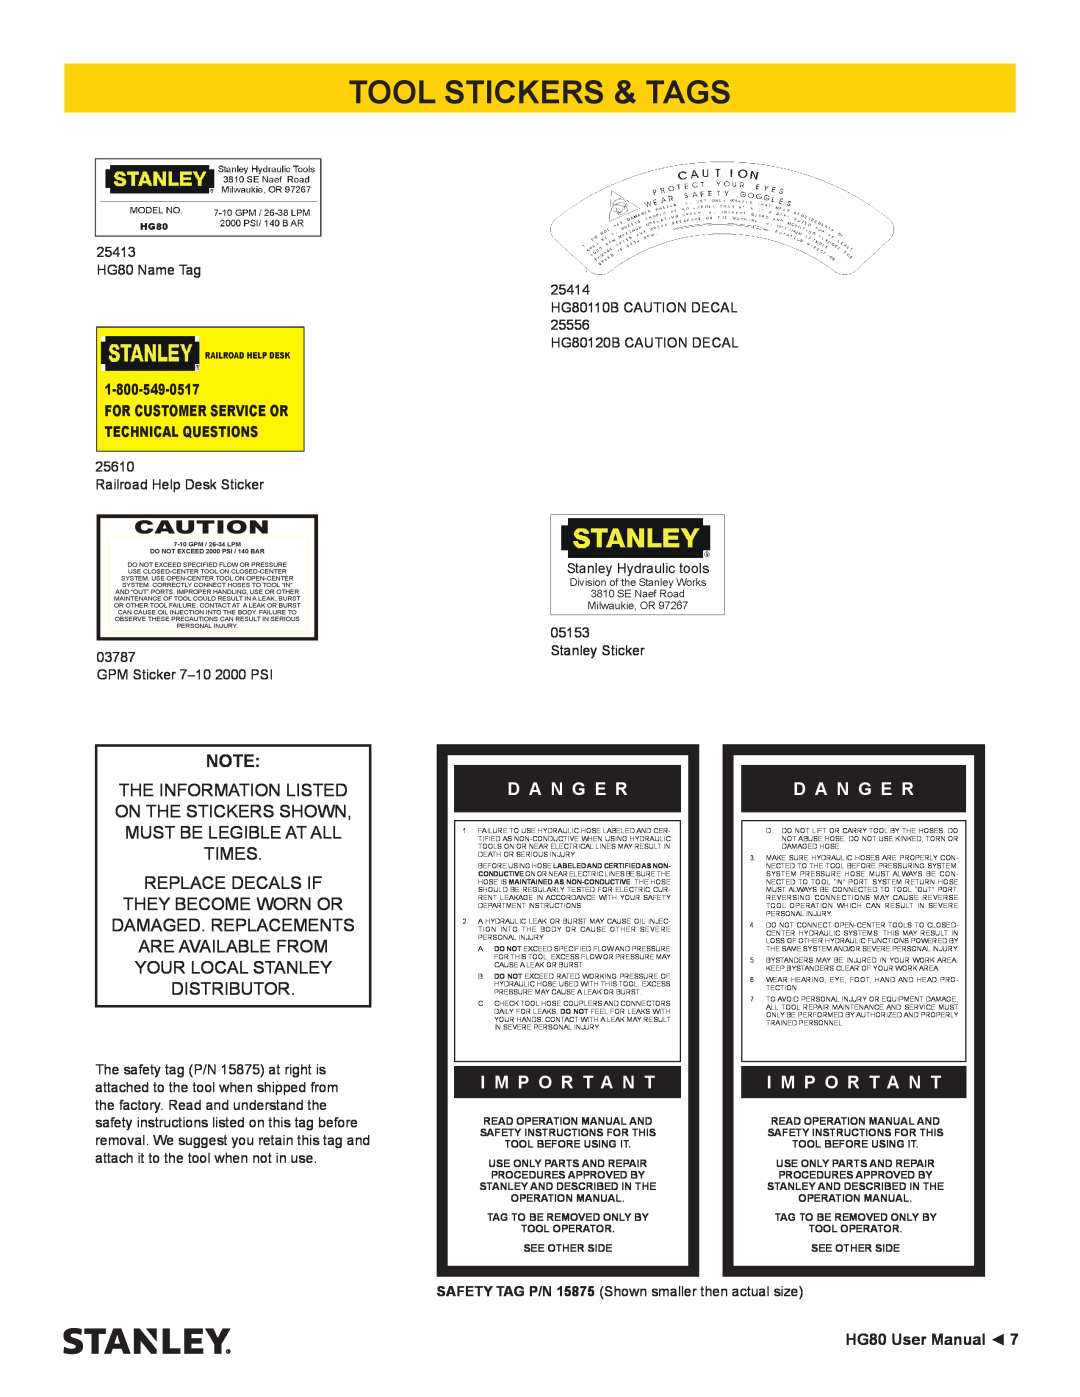 Stanley Black & Decker HG80 manual Tool Stickers & Tags, D A N G E R, I M P O R T A N T, Im P O R T A N T 